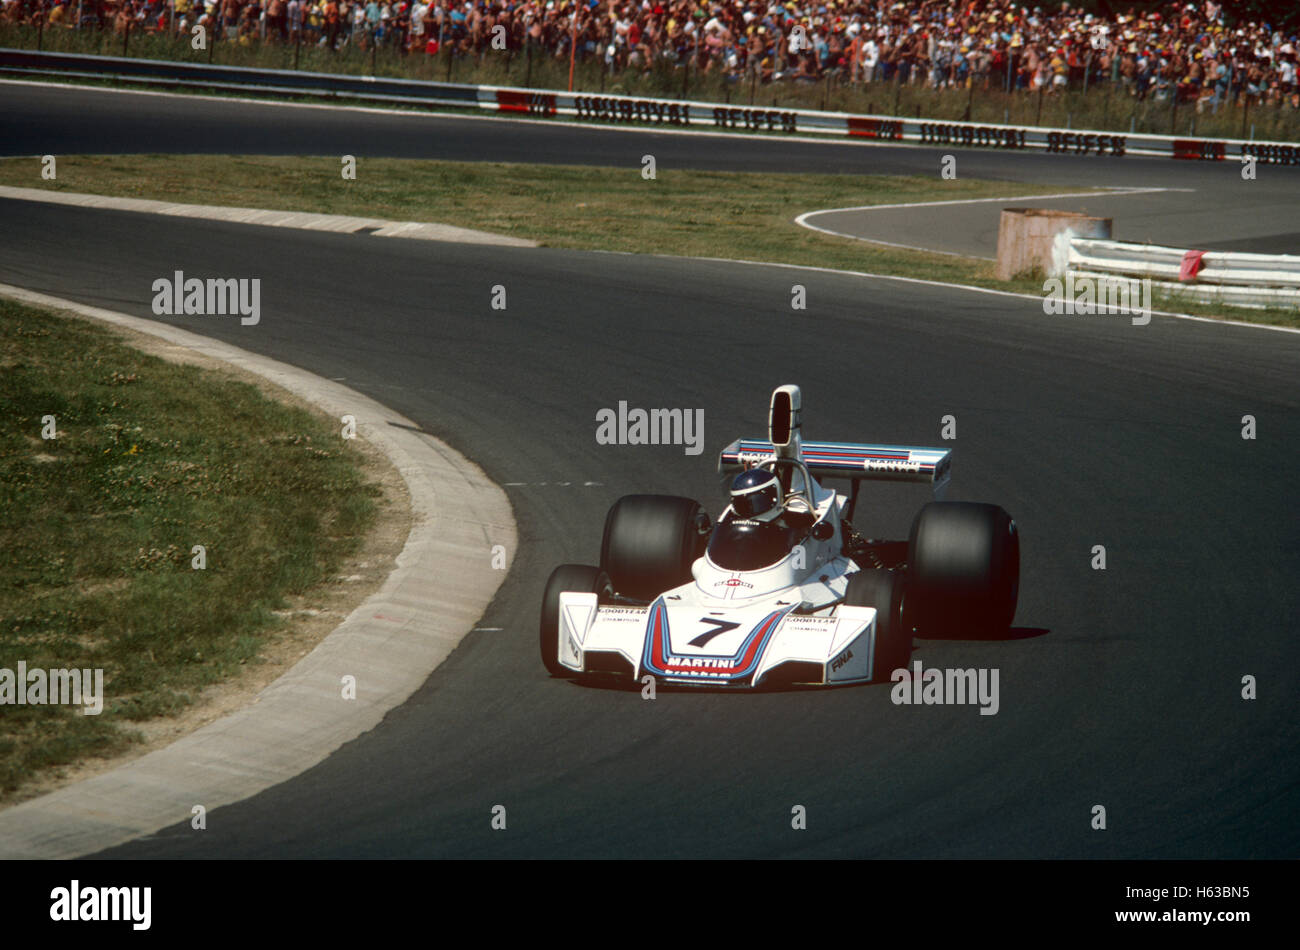 7 Carlos Reutemann su Brabham Cosworth BT44B gara vincitore al GP di Germania - Nurburgring 3 Agosto 1975 Foto Stock